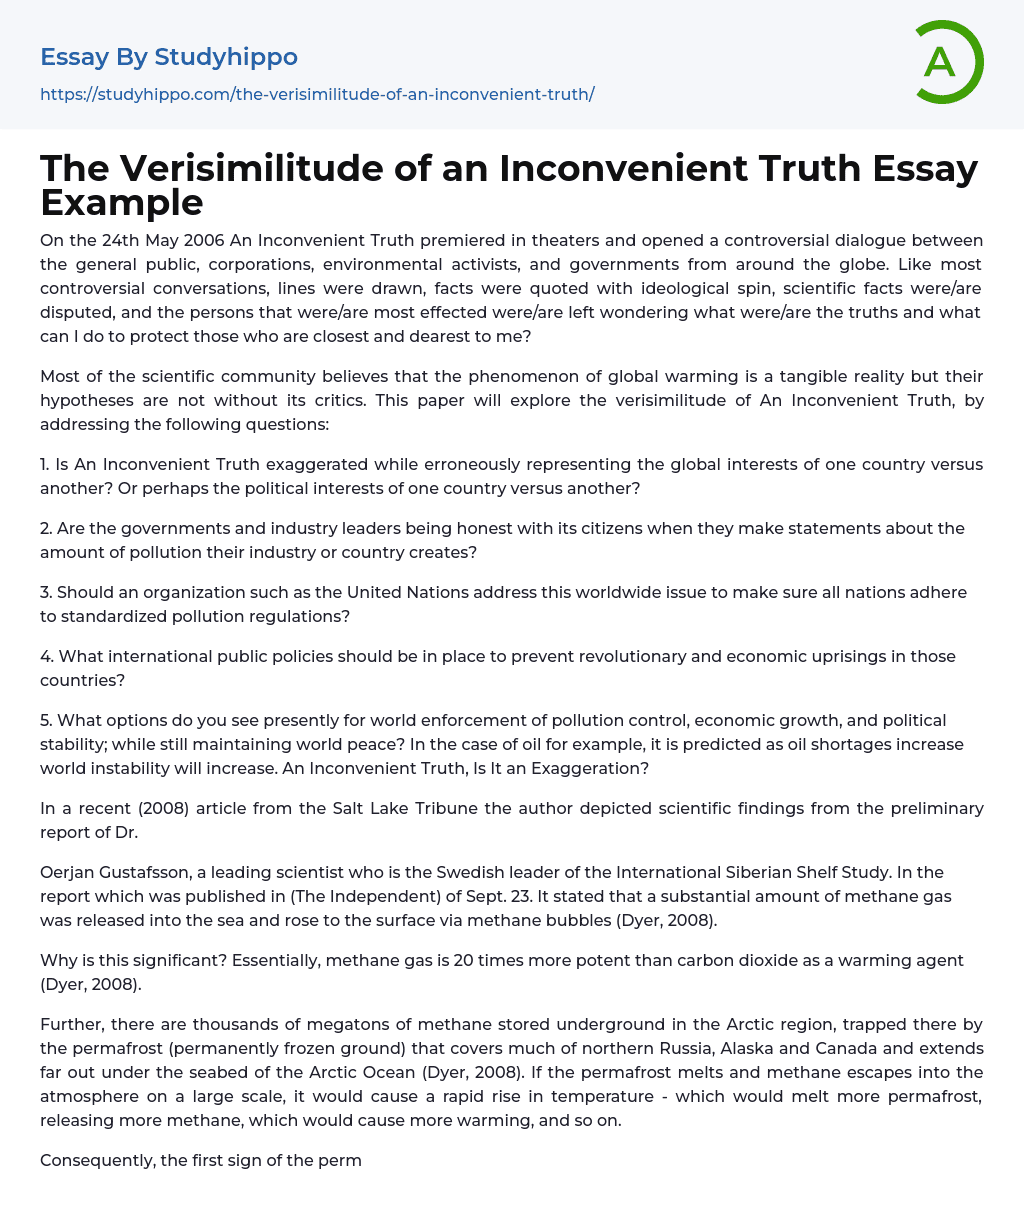 The Verisimilitude of an Inconvenient Truth Essay Example